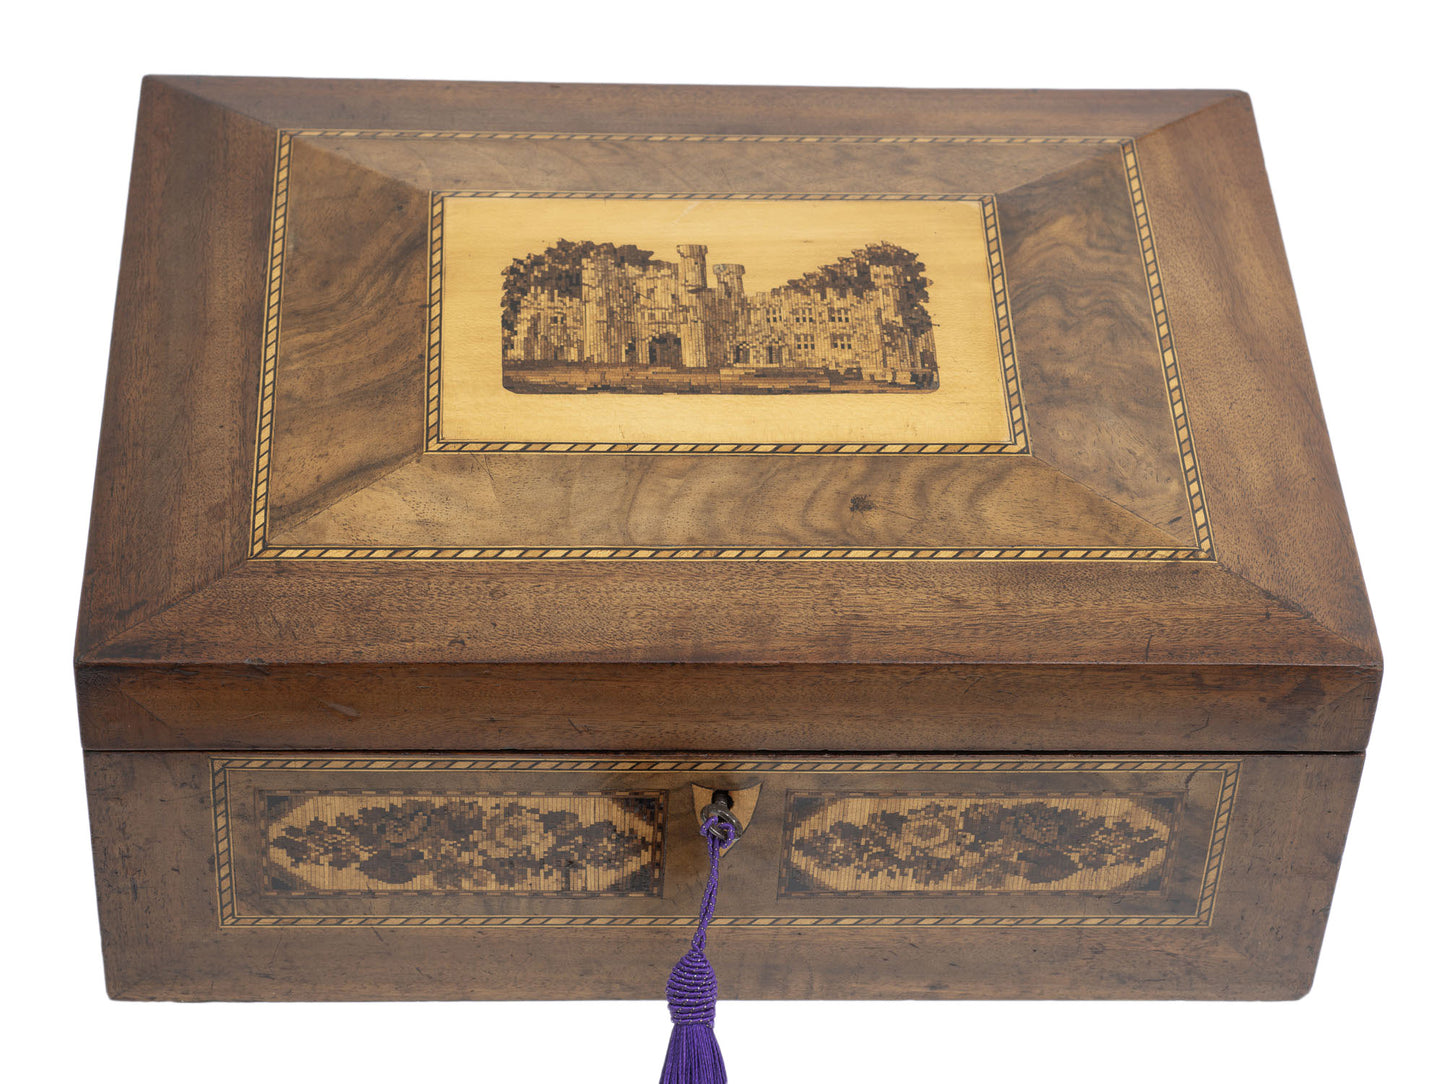 Antique Victorian Tunbridge Ware Wood Ladies Work Box with Birds, Dogs & Flowers (2935)